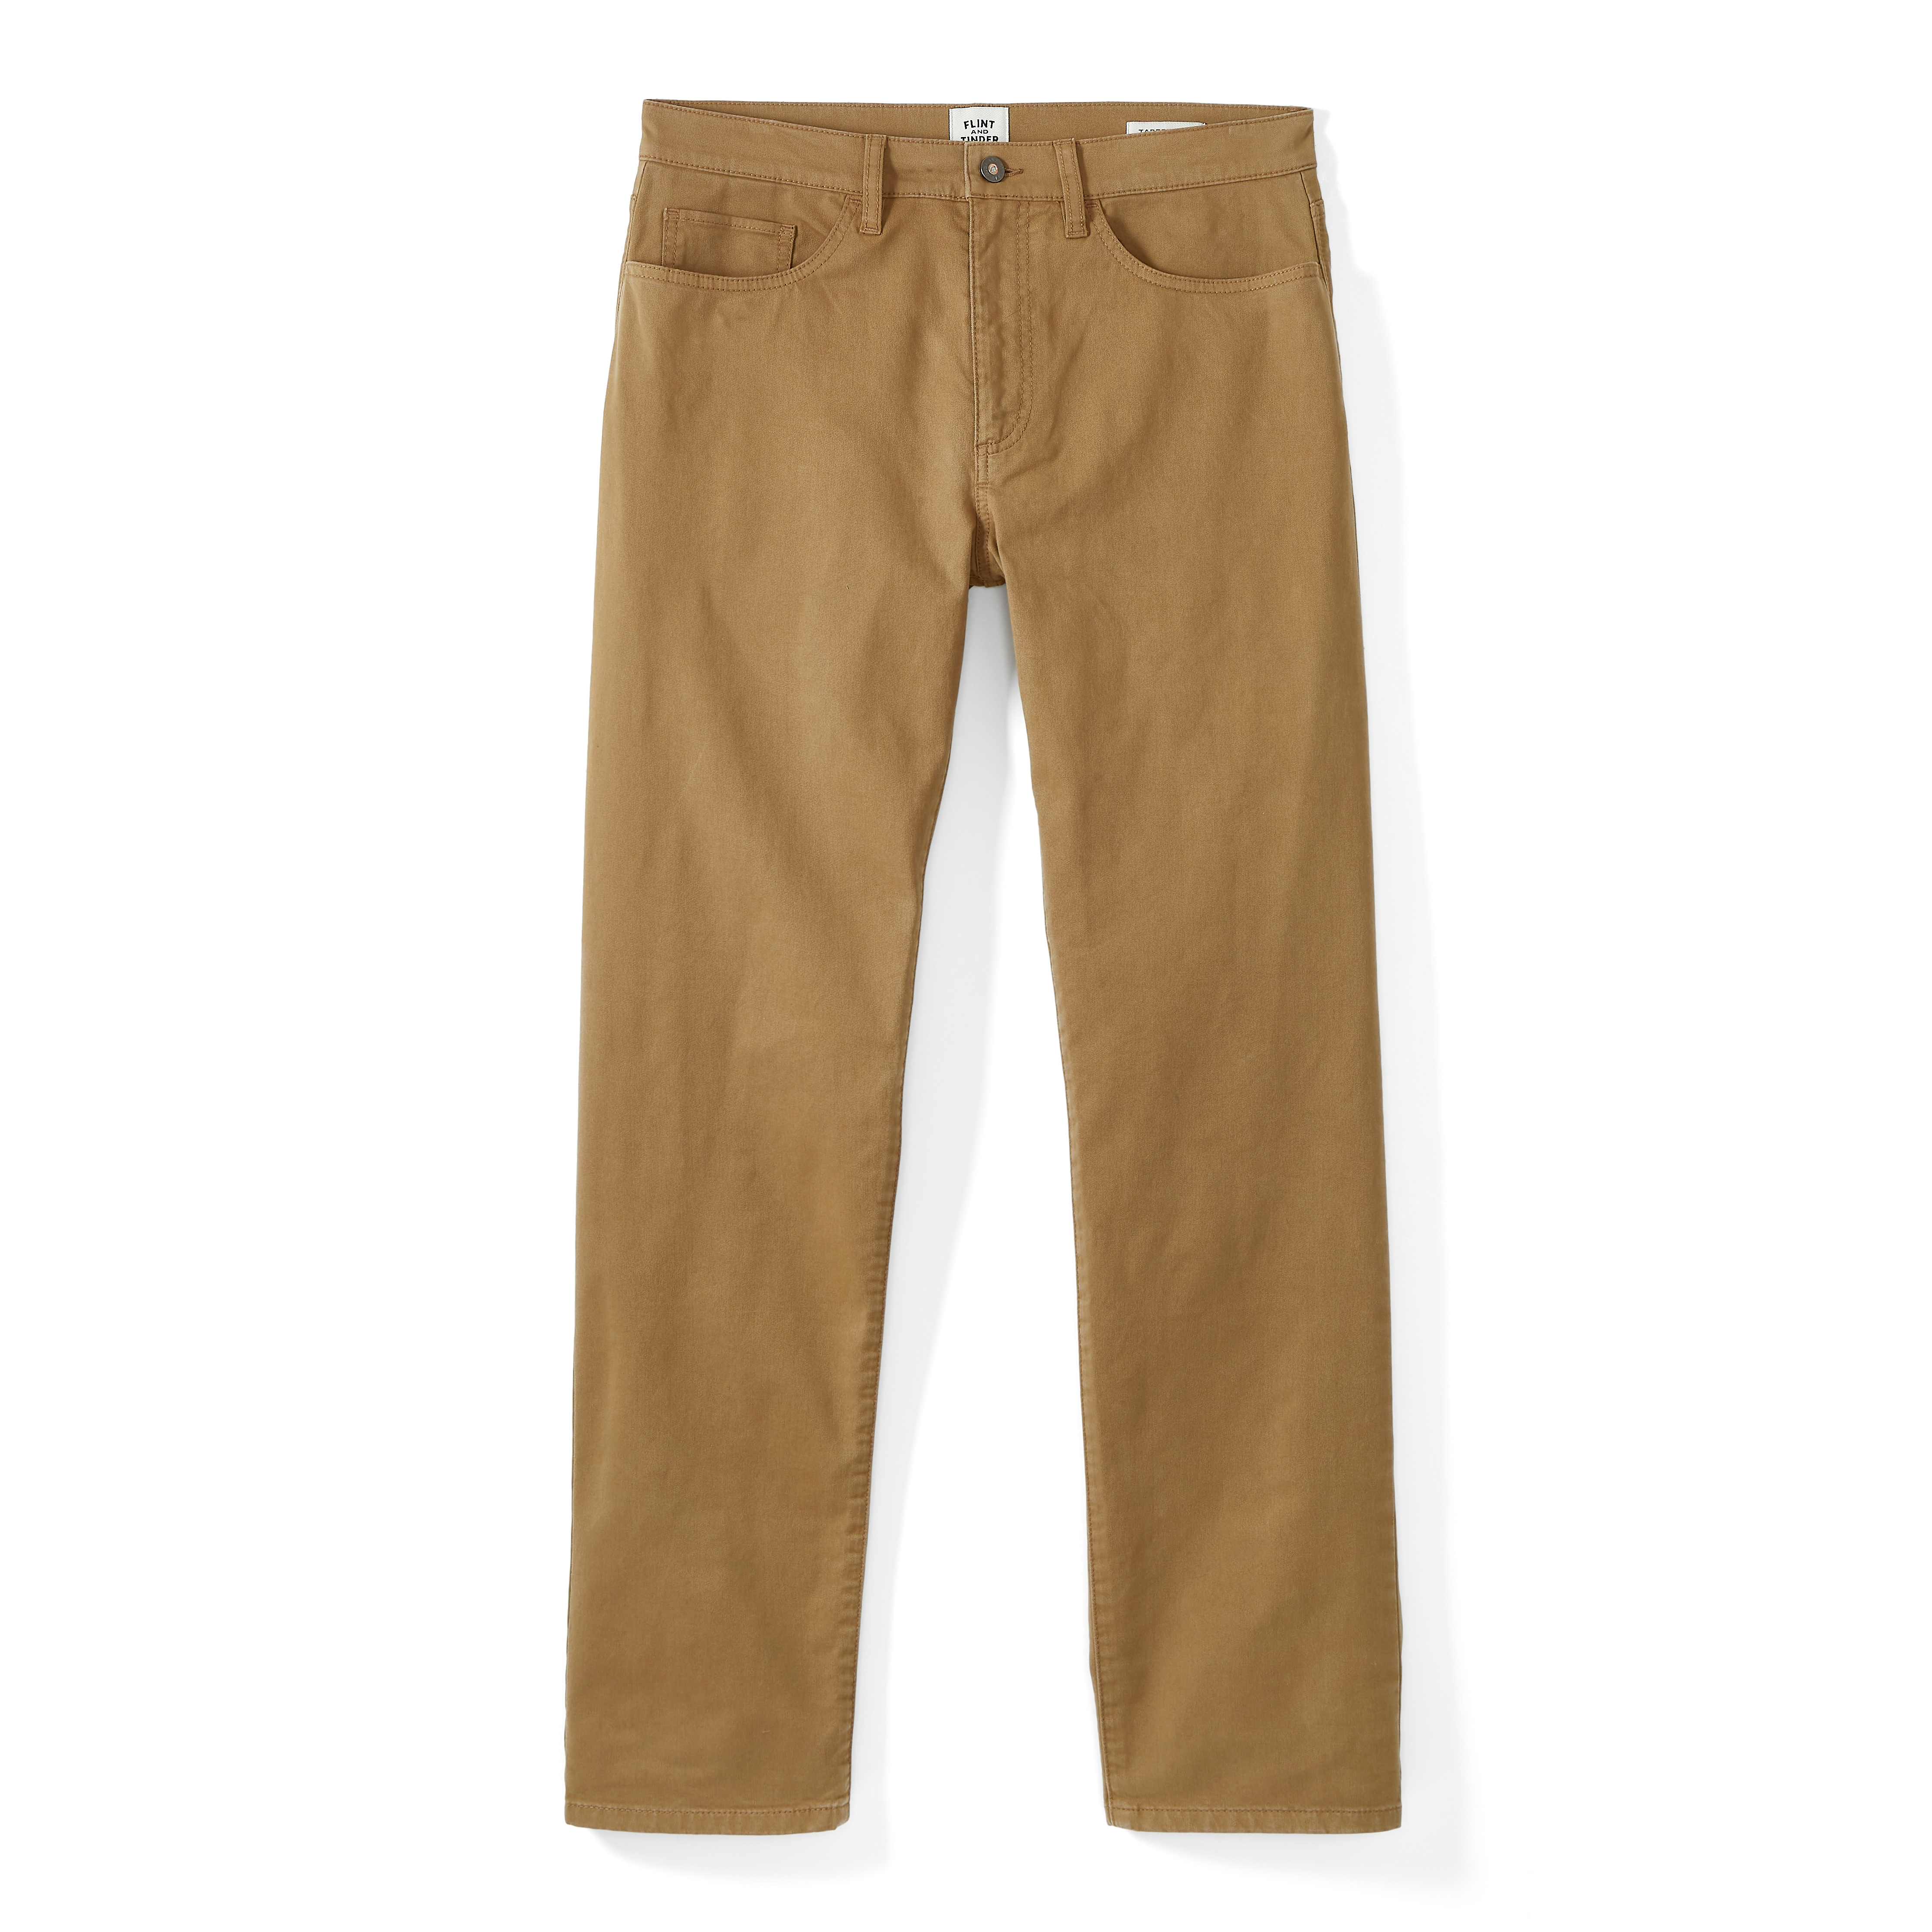 Lands' End Men Traditional Fit Stretch Corduroy Pants, Deep Khaki, Size 34  X 31